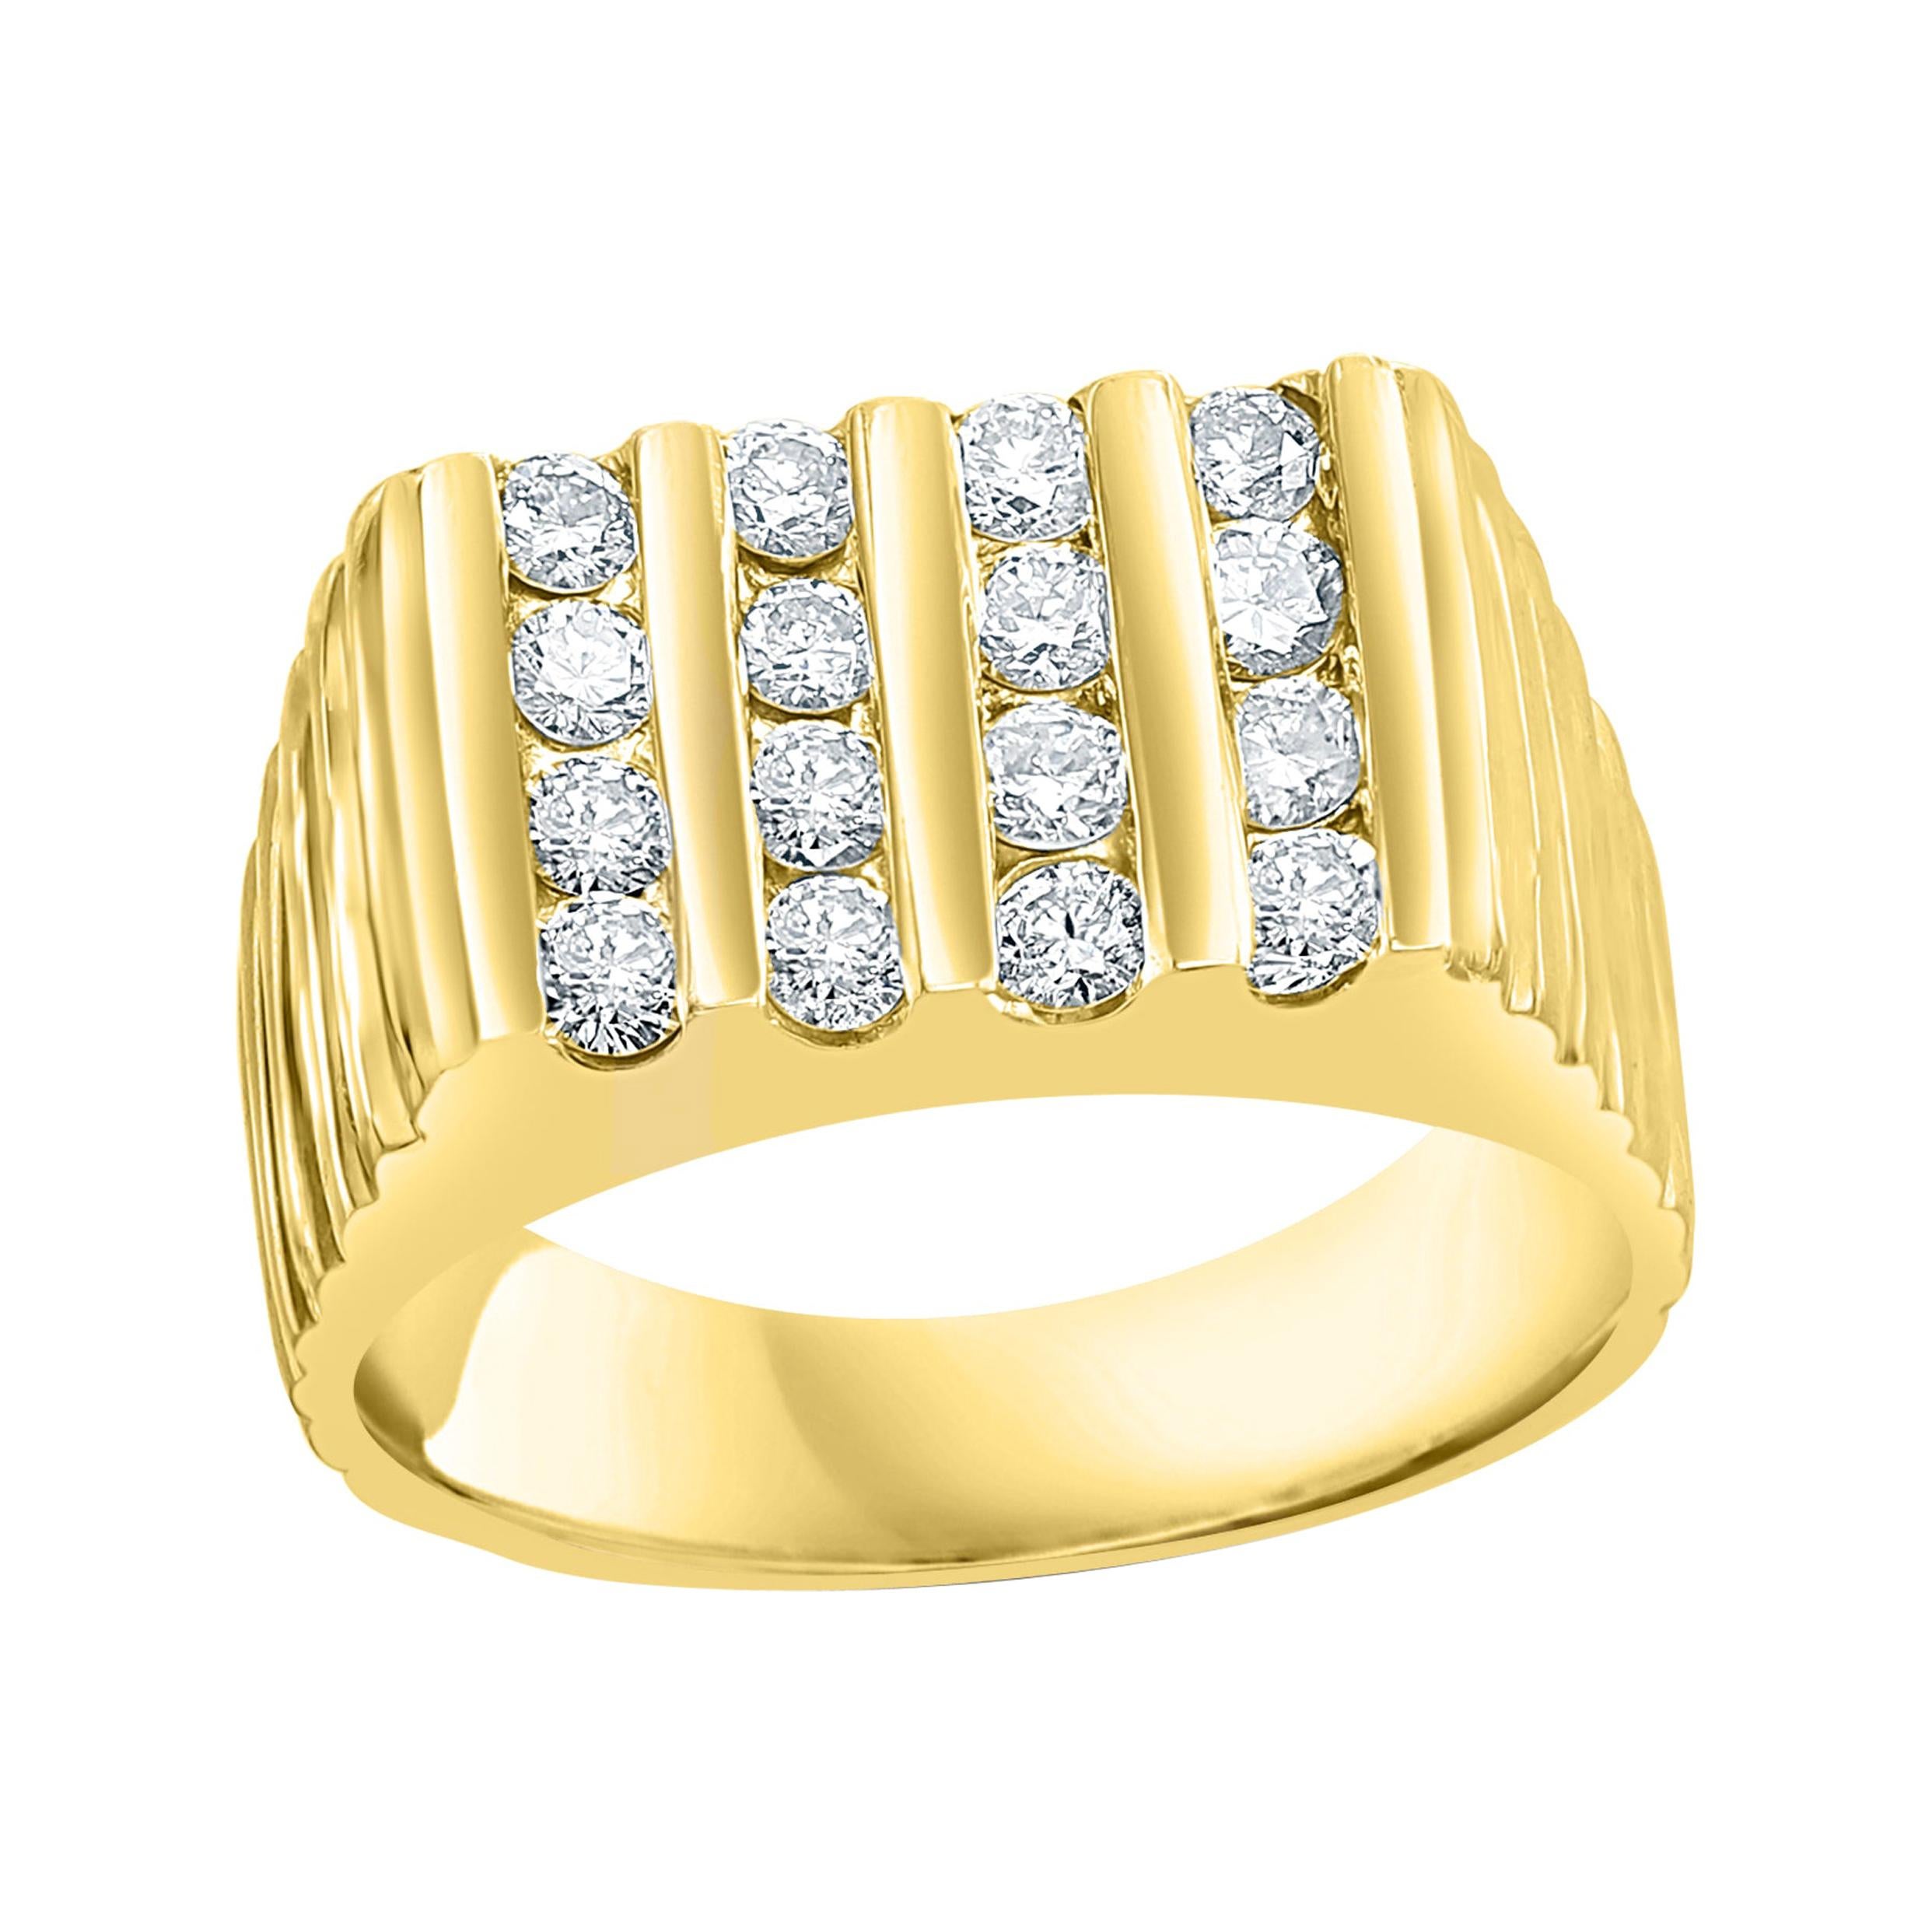 4 Row Unisex Diamond Band Engagement Ring in 14 Karat Yellow Gold